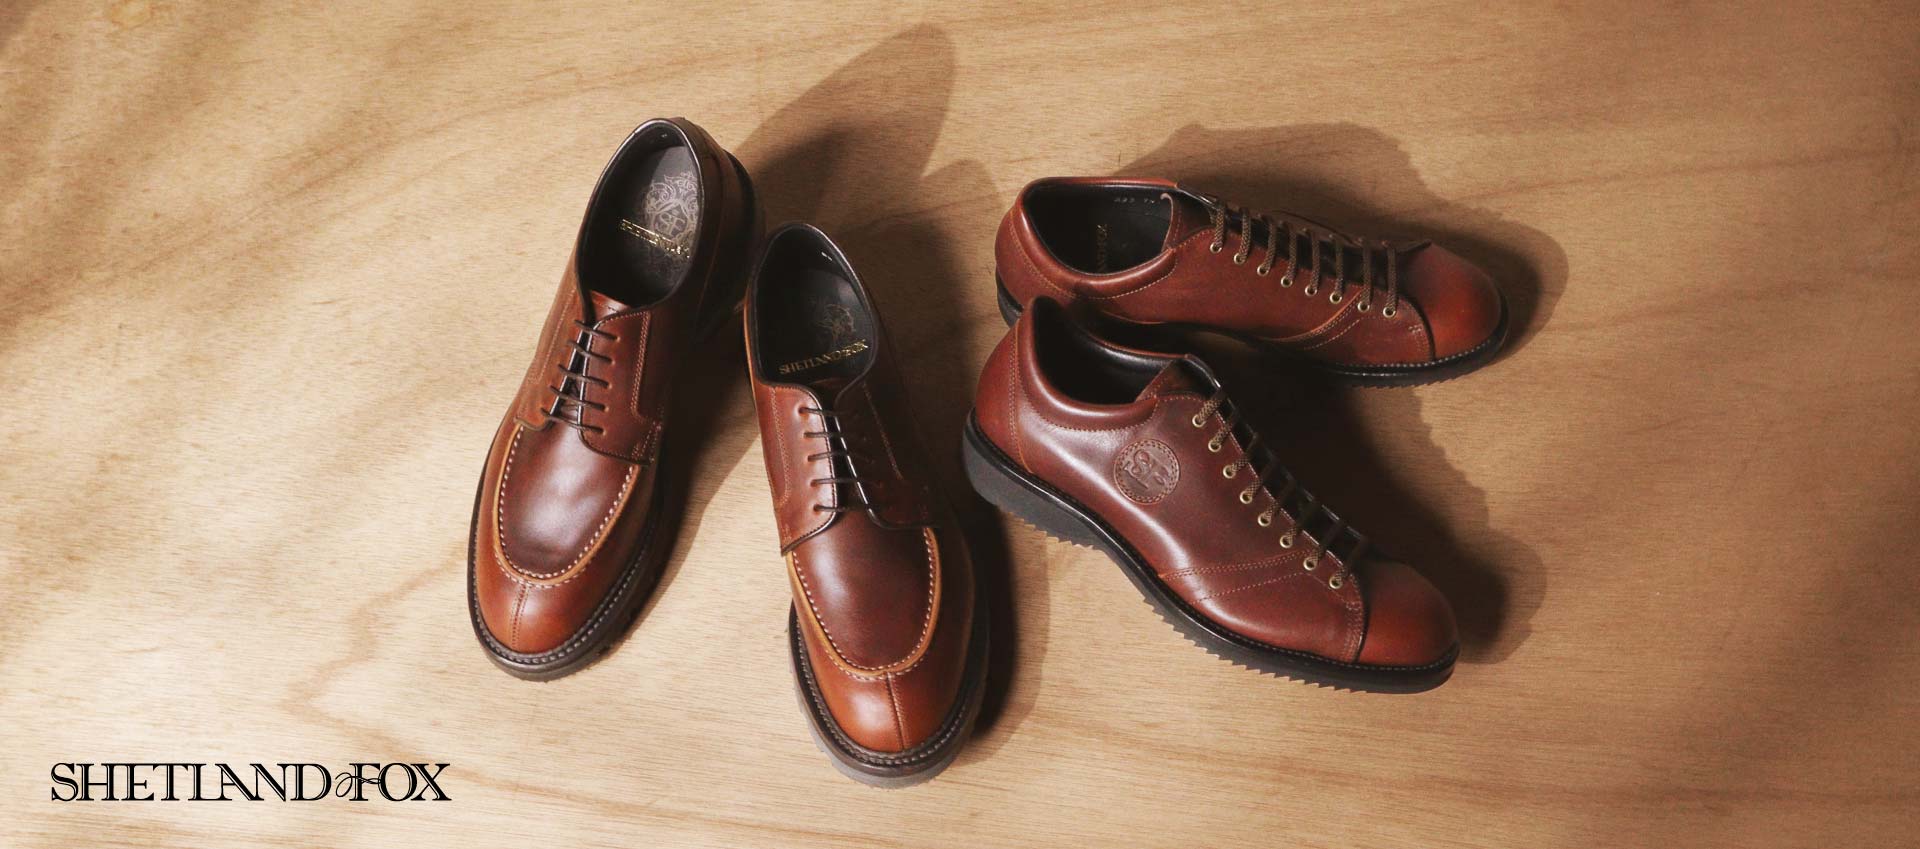 SHETLANDFOX シェットランドフォックス | ブランド 公式サイト 靴 